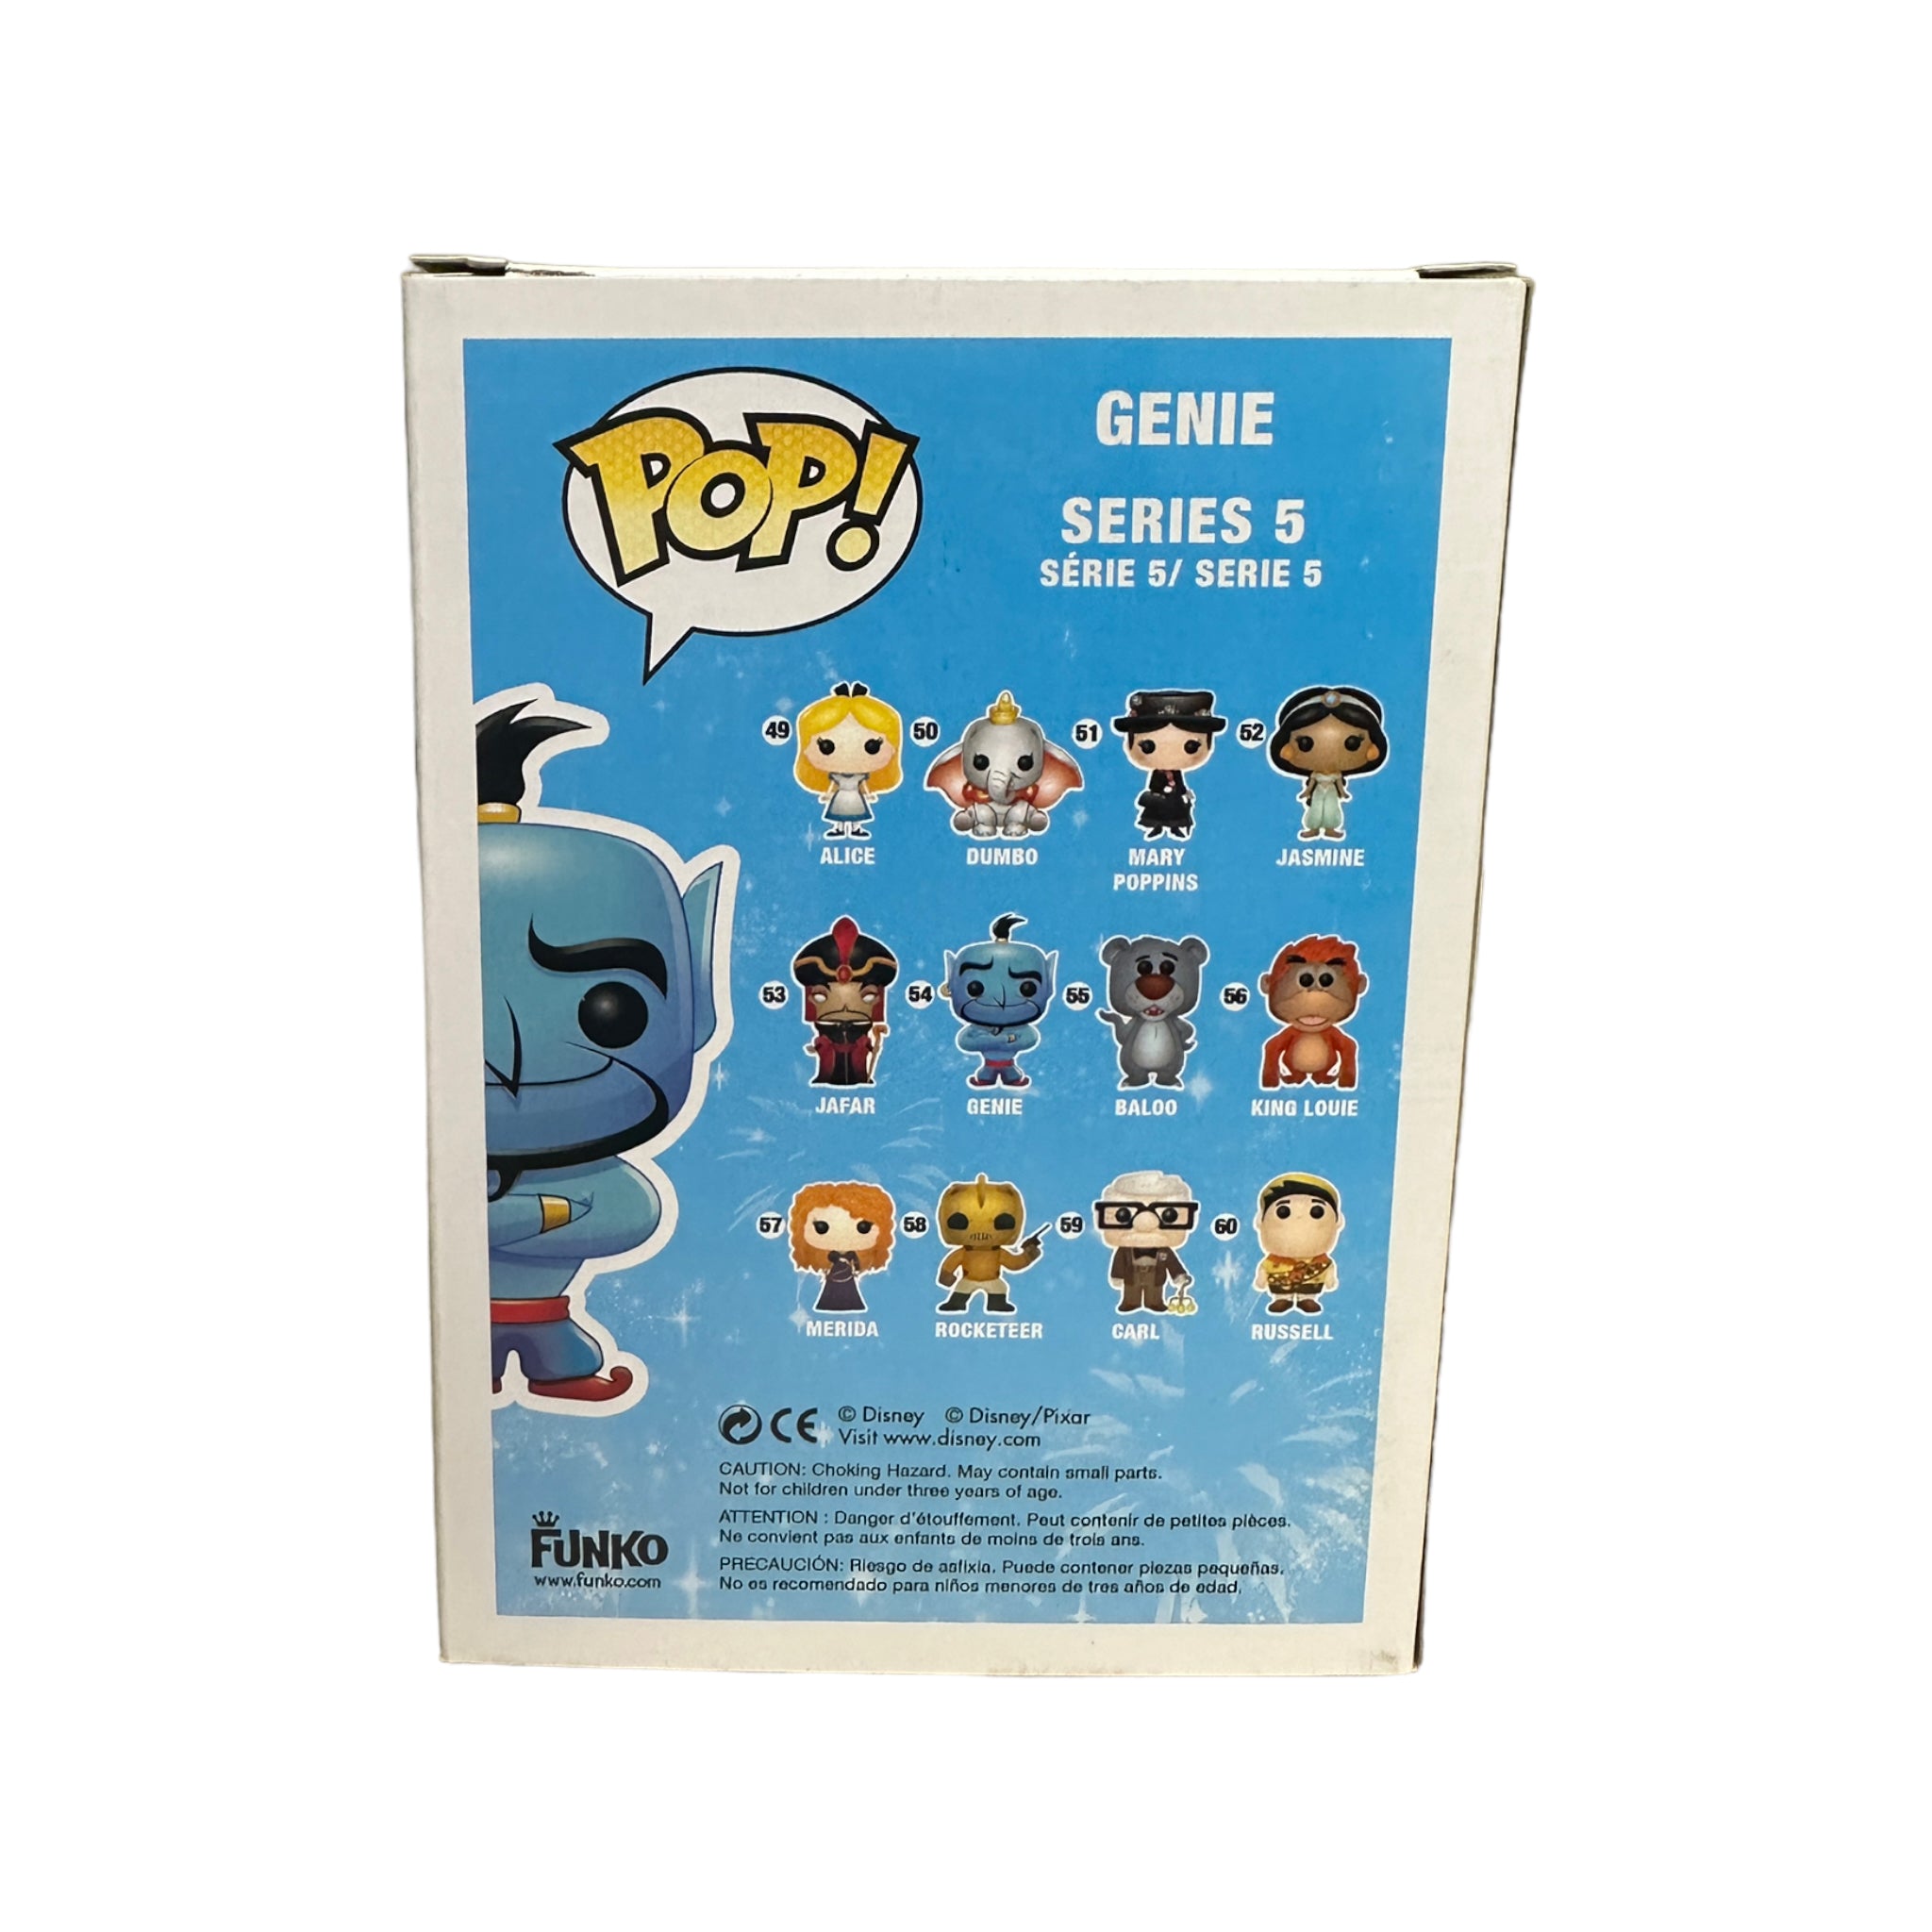 Genie #54 (Metallic) Funko Pop! - Disney - SDCC 2013 Exclusive LE480 Pcs - Condition 8/10